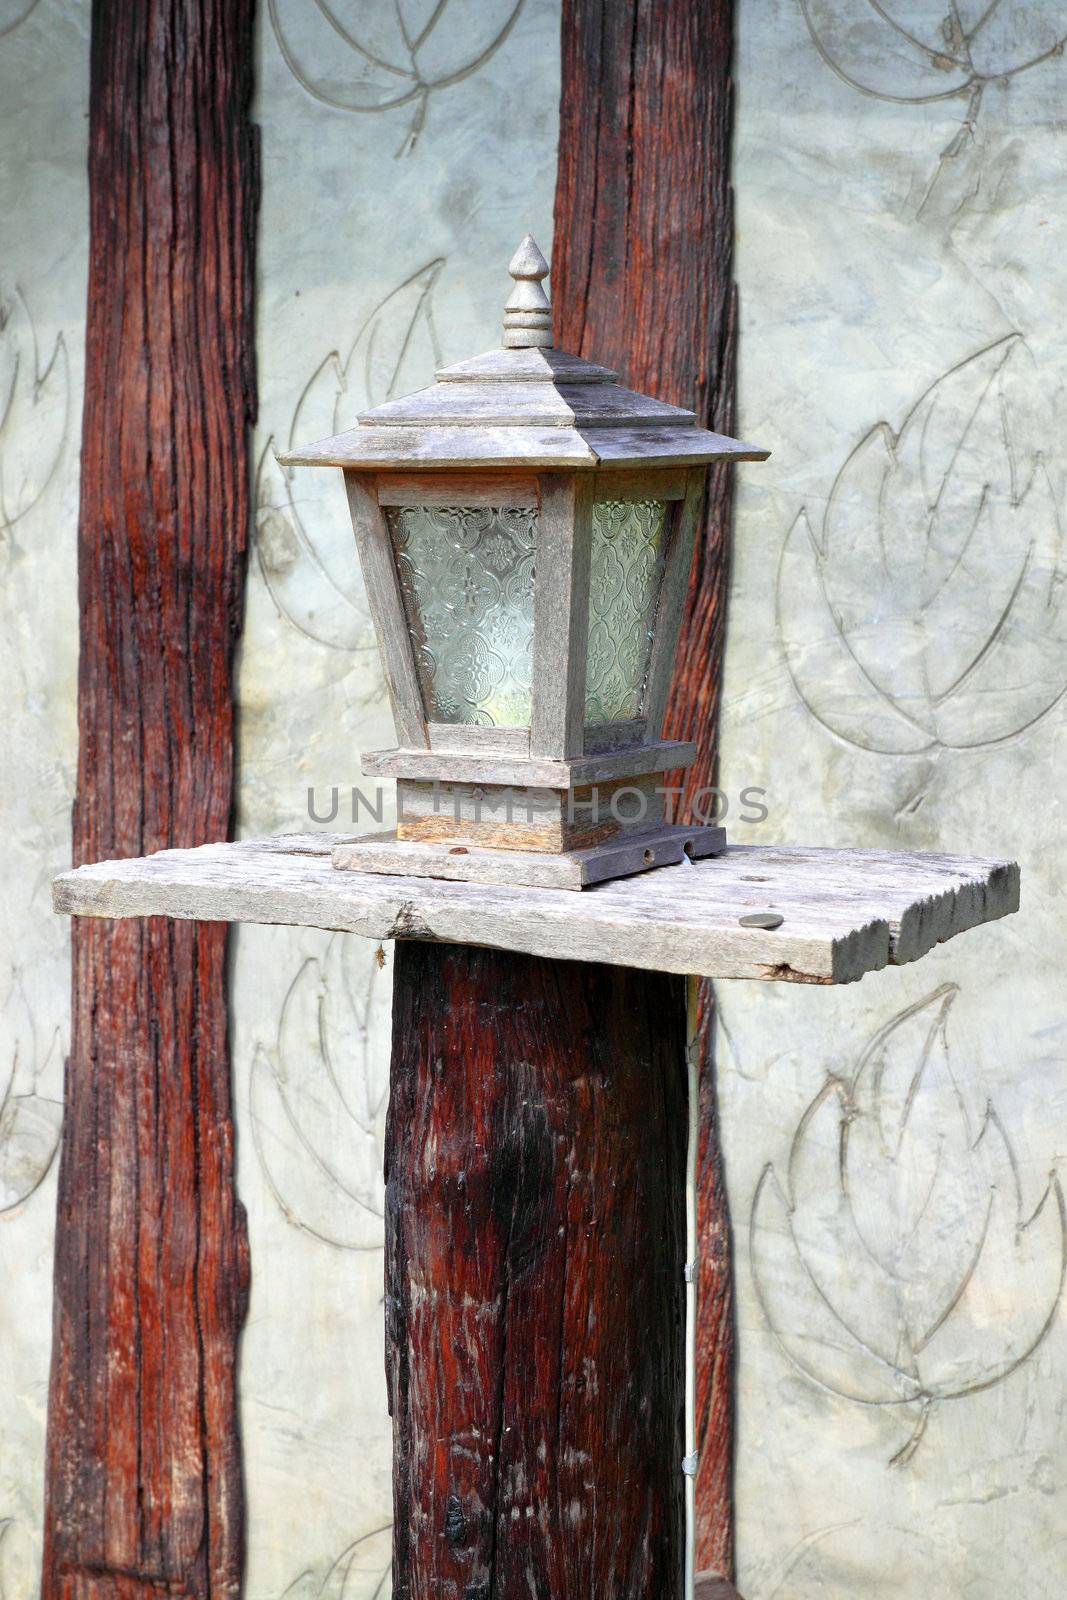 wood ancient lamp in resort at Khaokho, Thailand